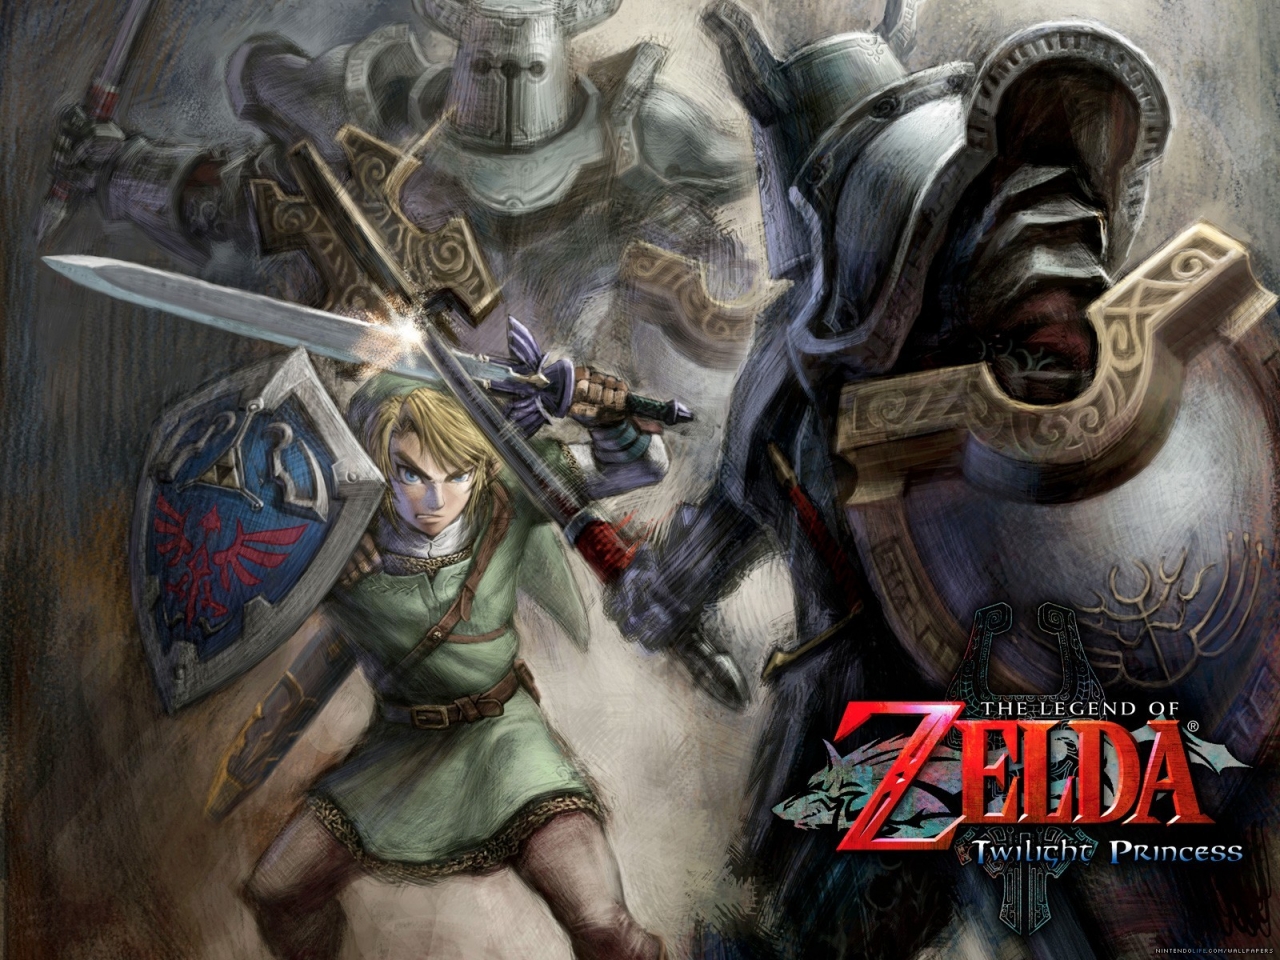 The Legend of Zelda Twilight Princess for 1280 x 960 resolution